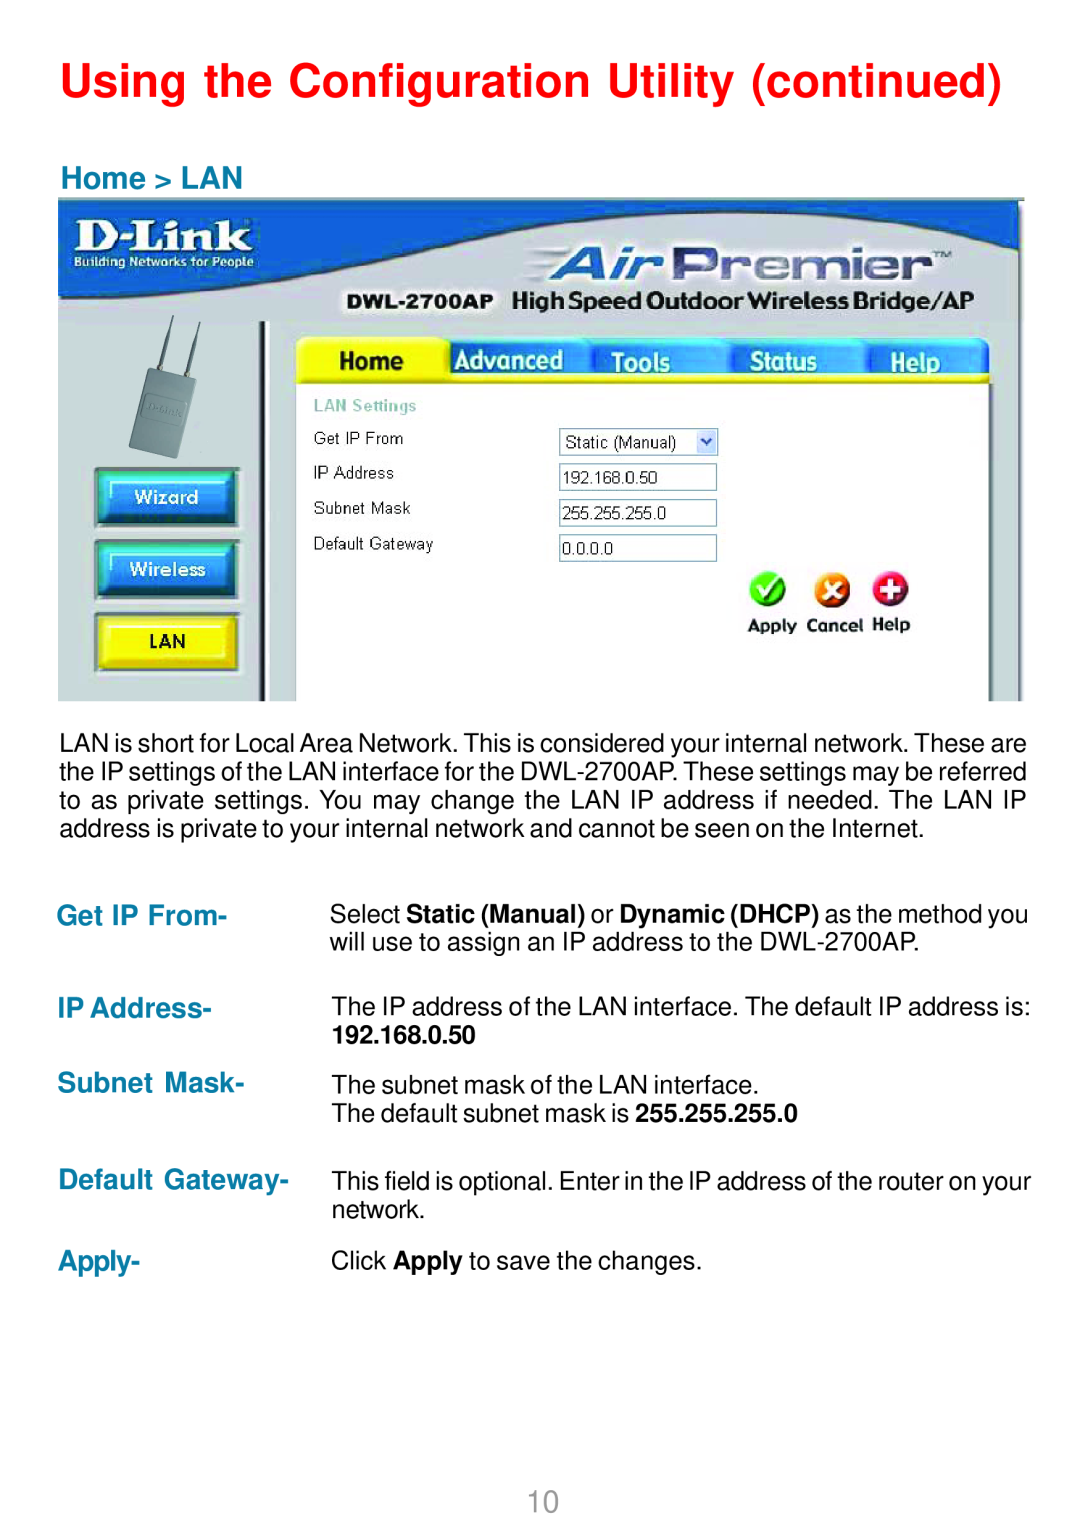 D-Link DWL-2700AP warranty Home LAN, Get IP From IP Address Subnet Mask Default Gateway Apply, 192.168.0.50 